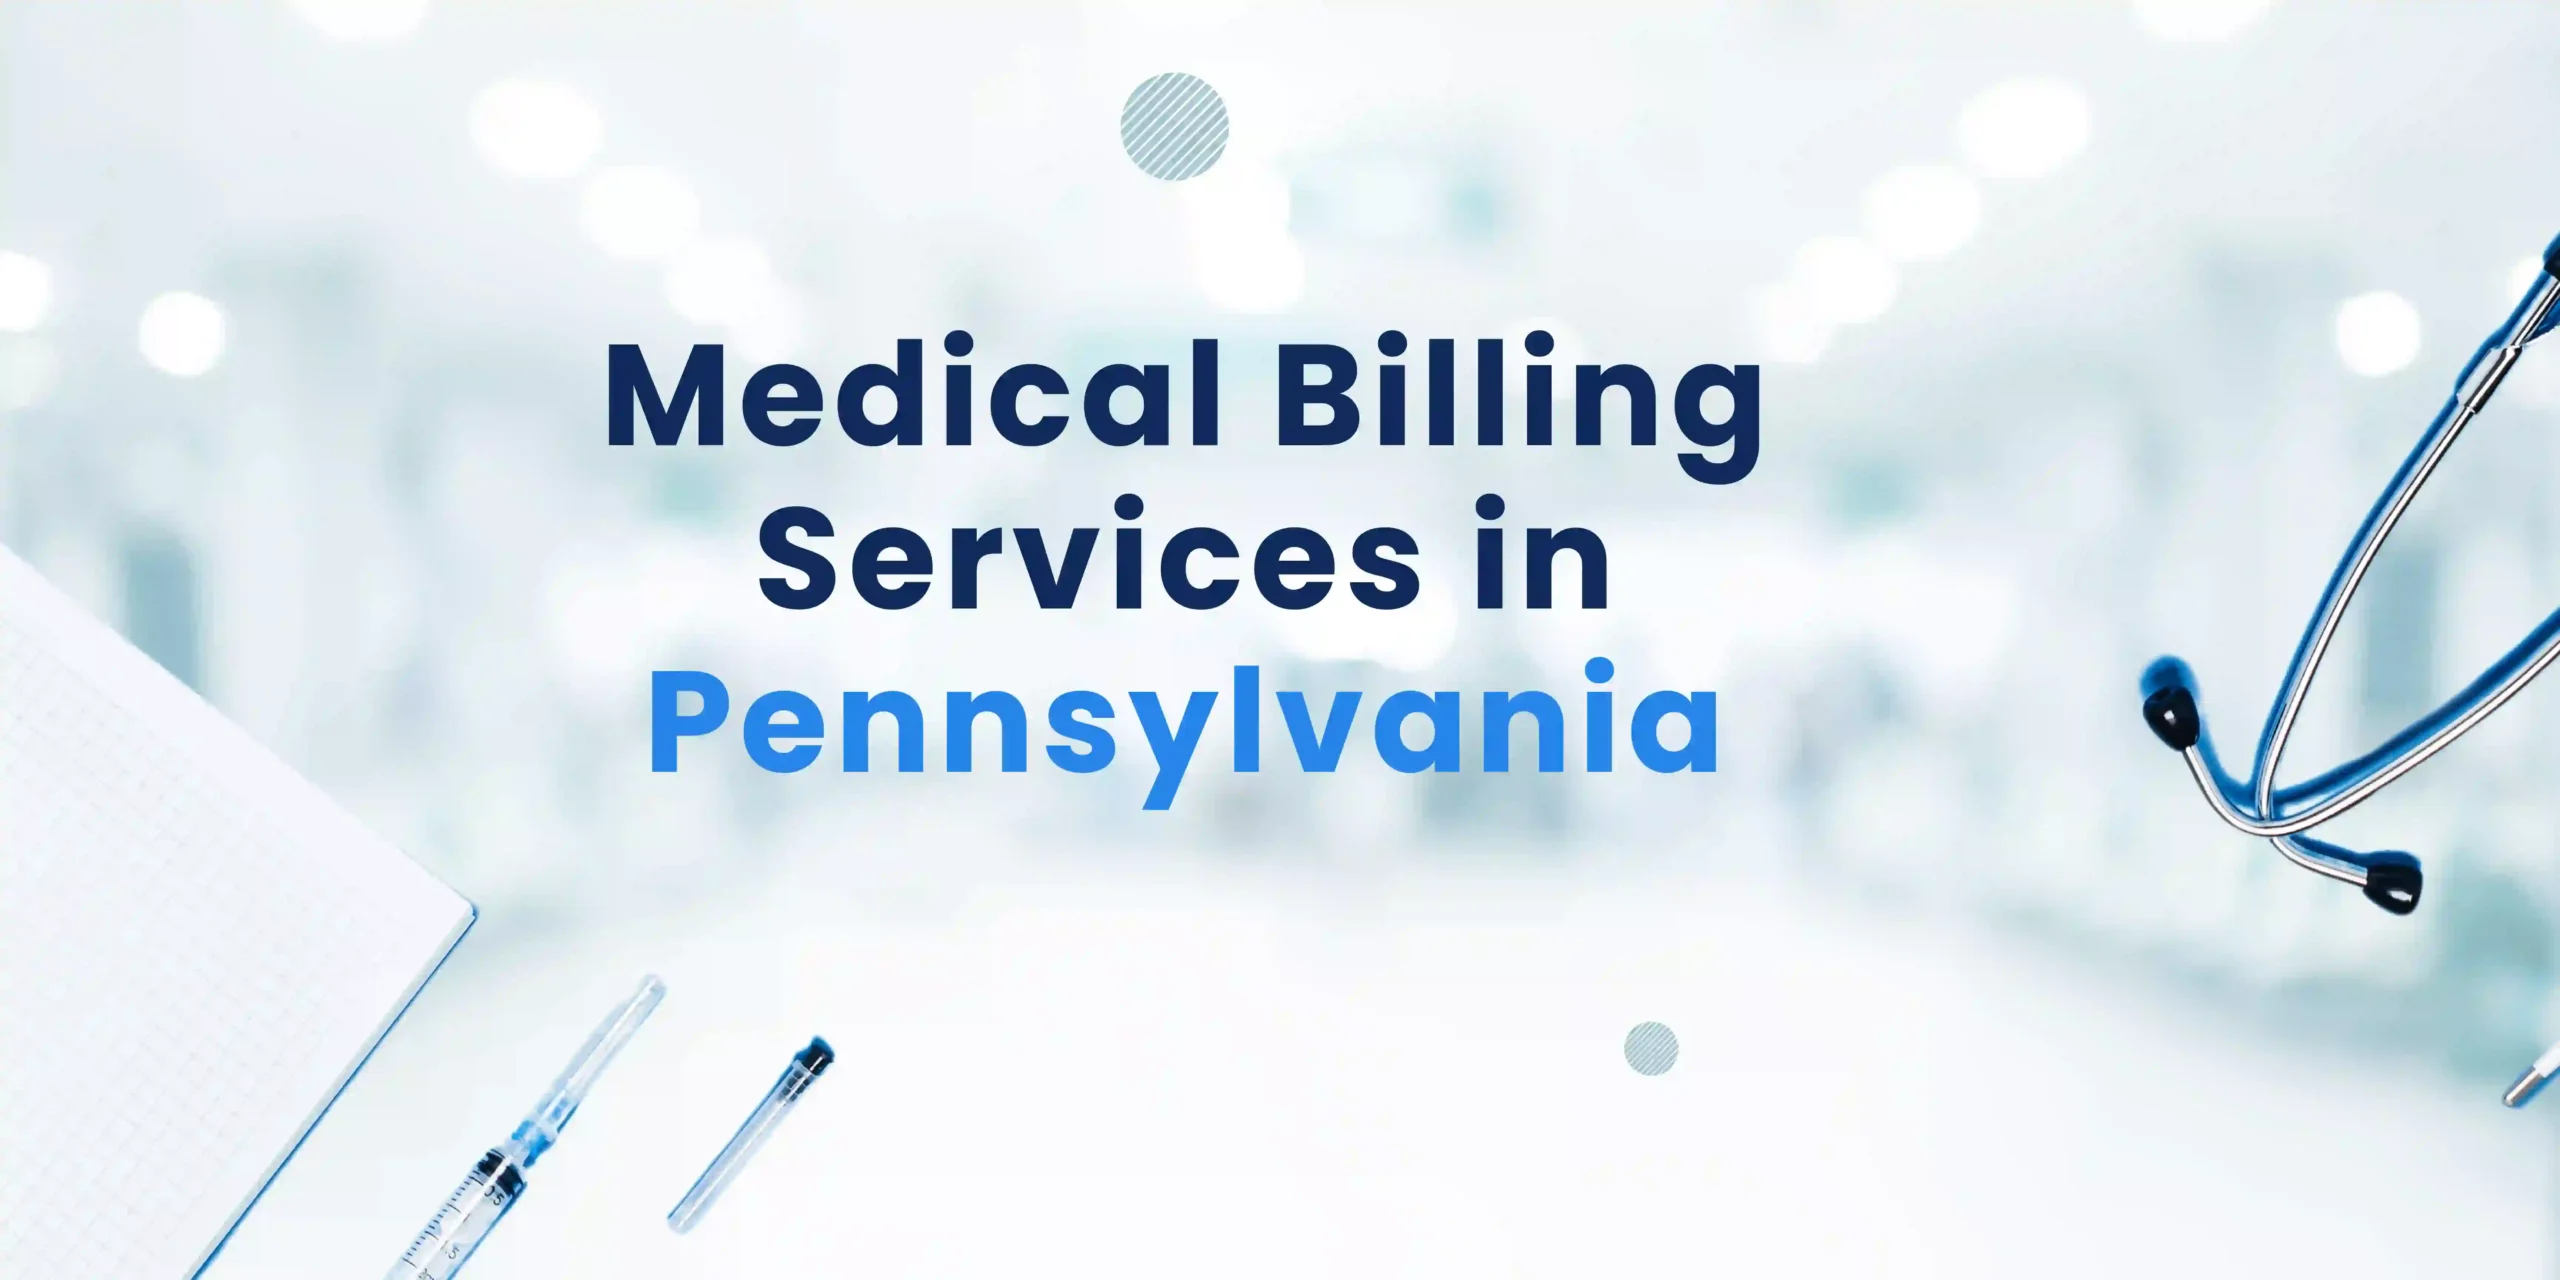 Medical Billing Services in Pennsylvania